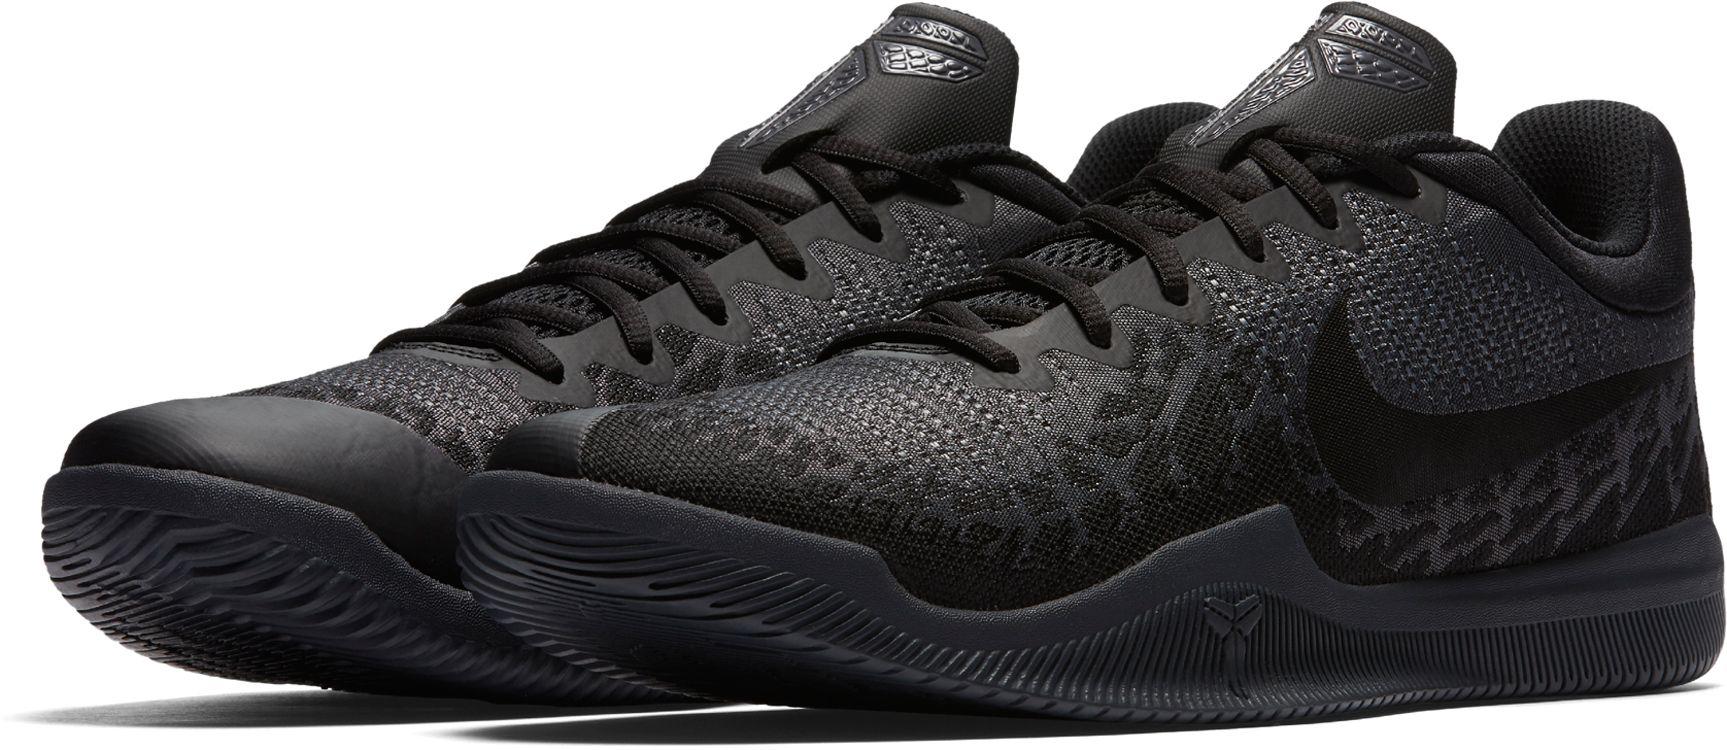 Nike Rubber Kobe Mamba Rage Basketball Shoes in Black/Dark